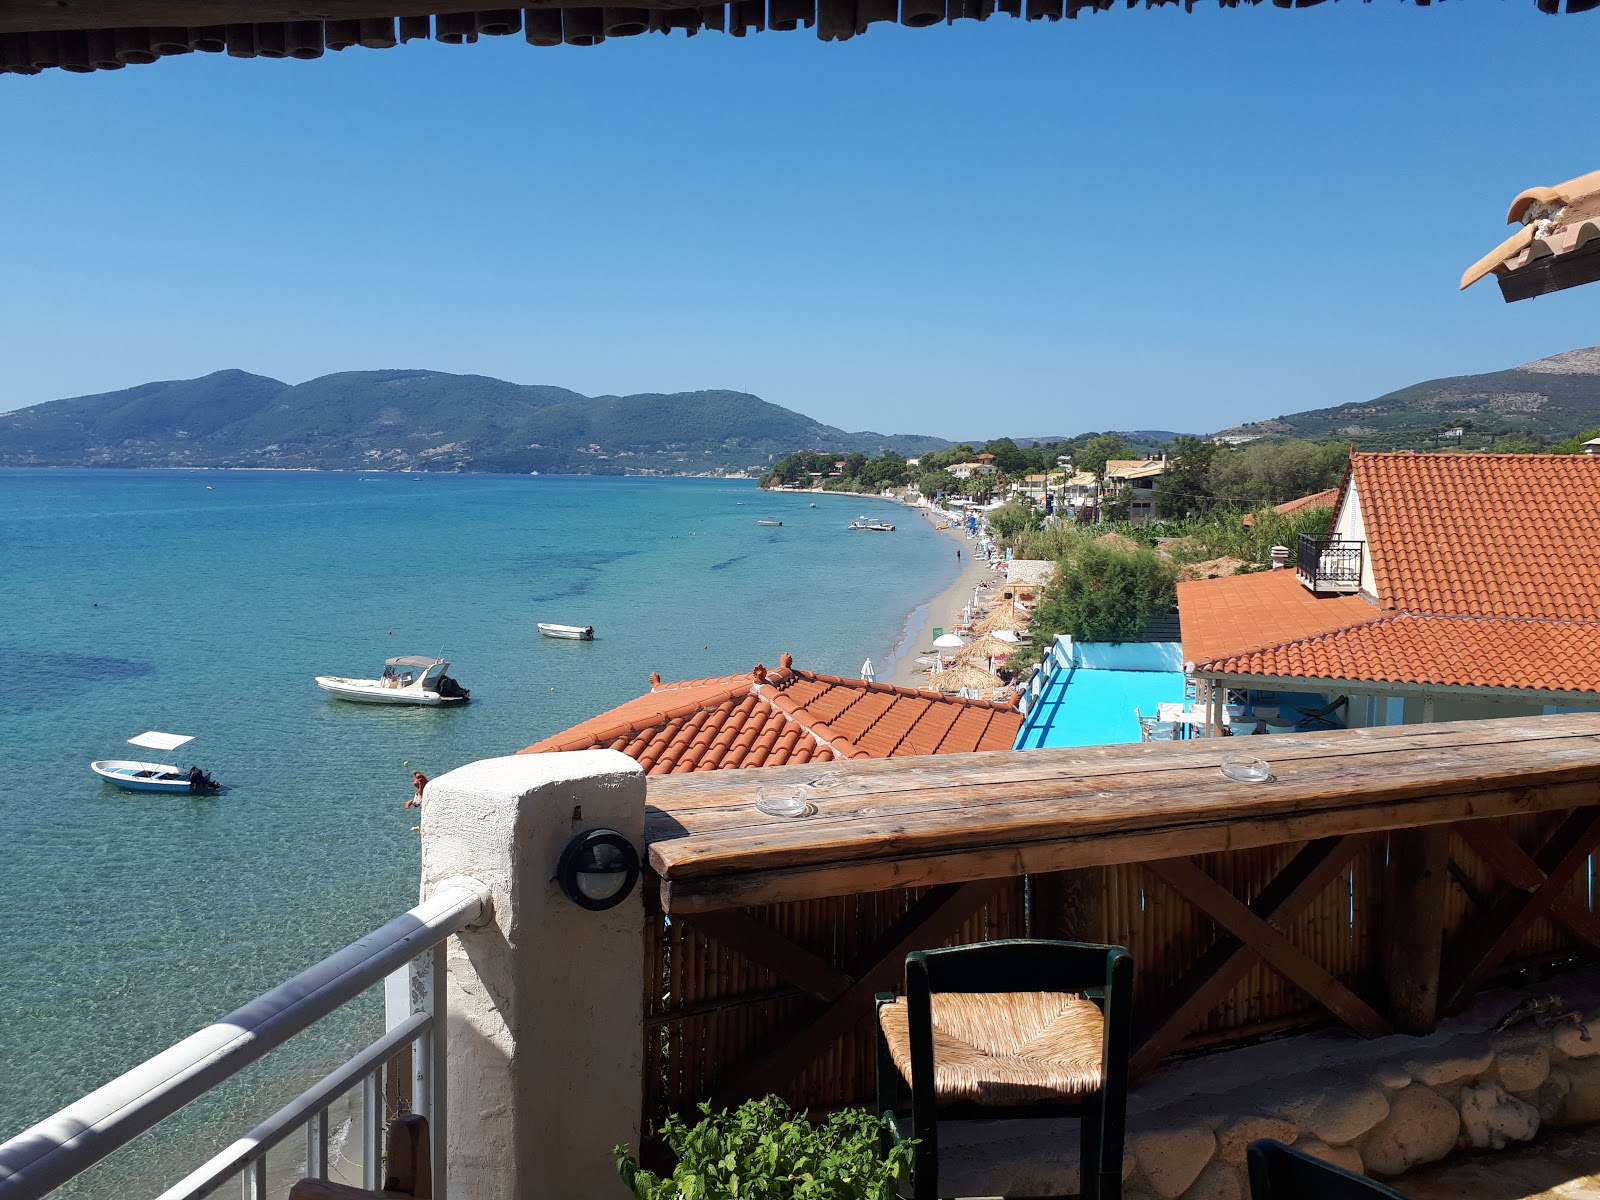 Foto af Agios Sostis beach med store bugter